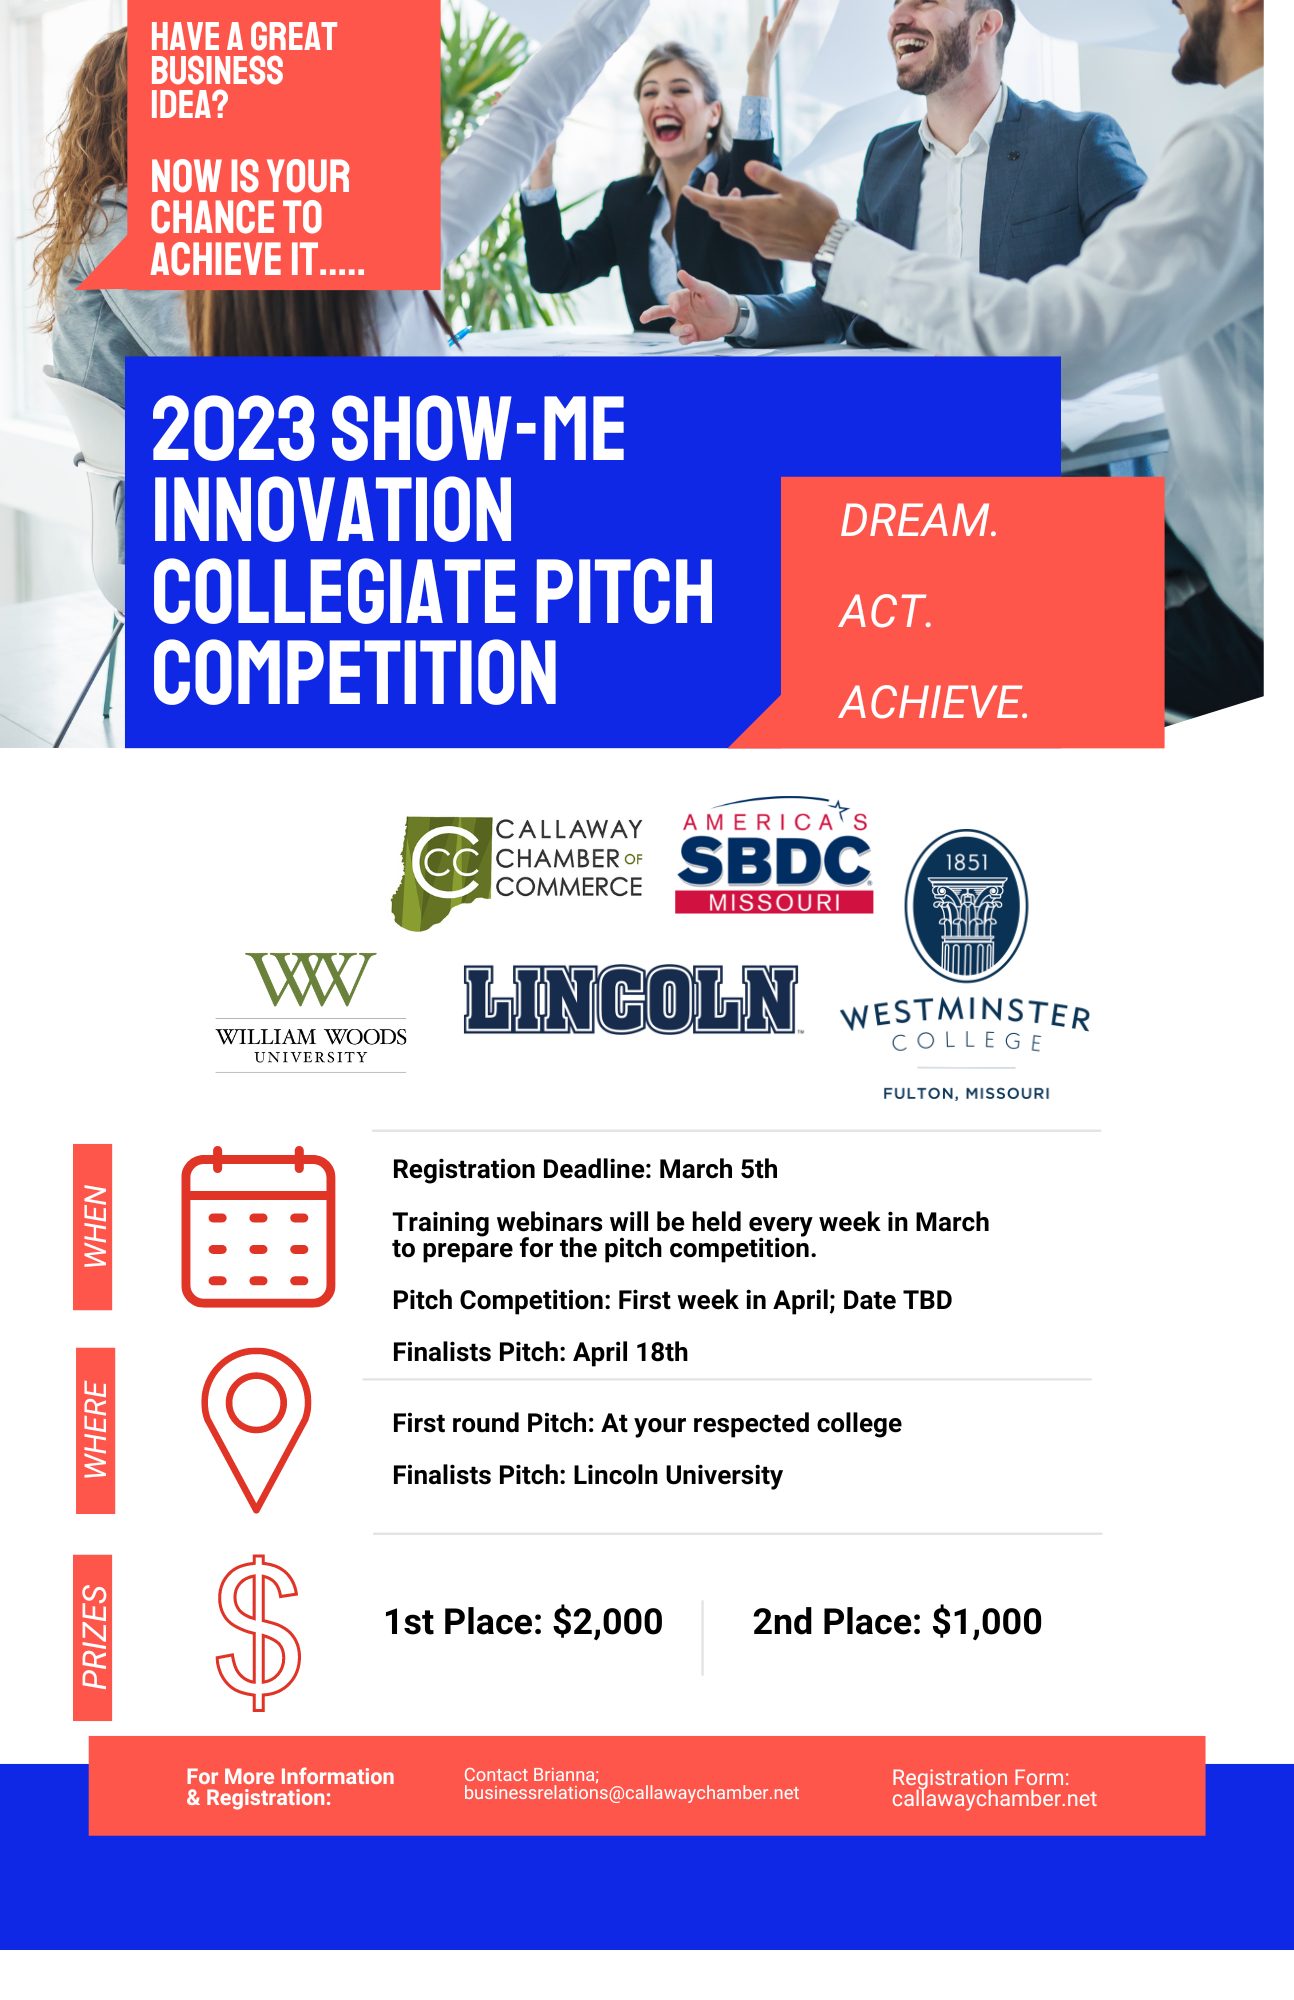 2023 Collegiate pitch competition